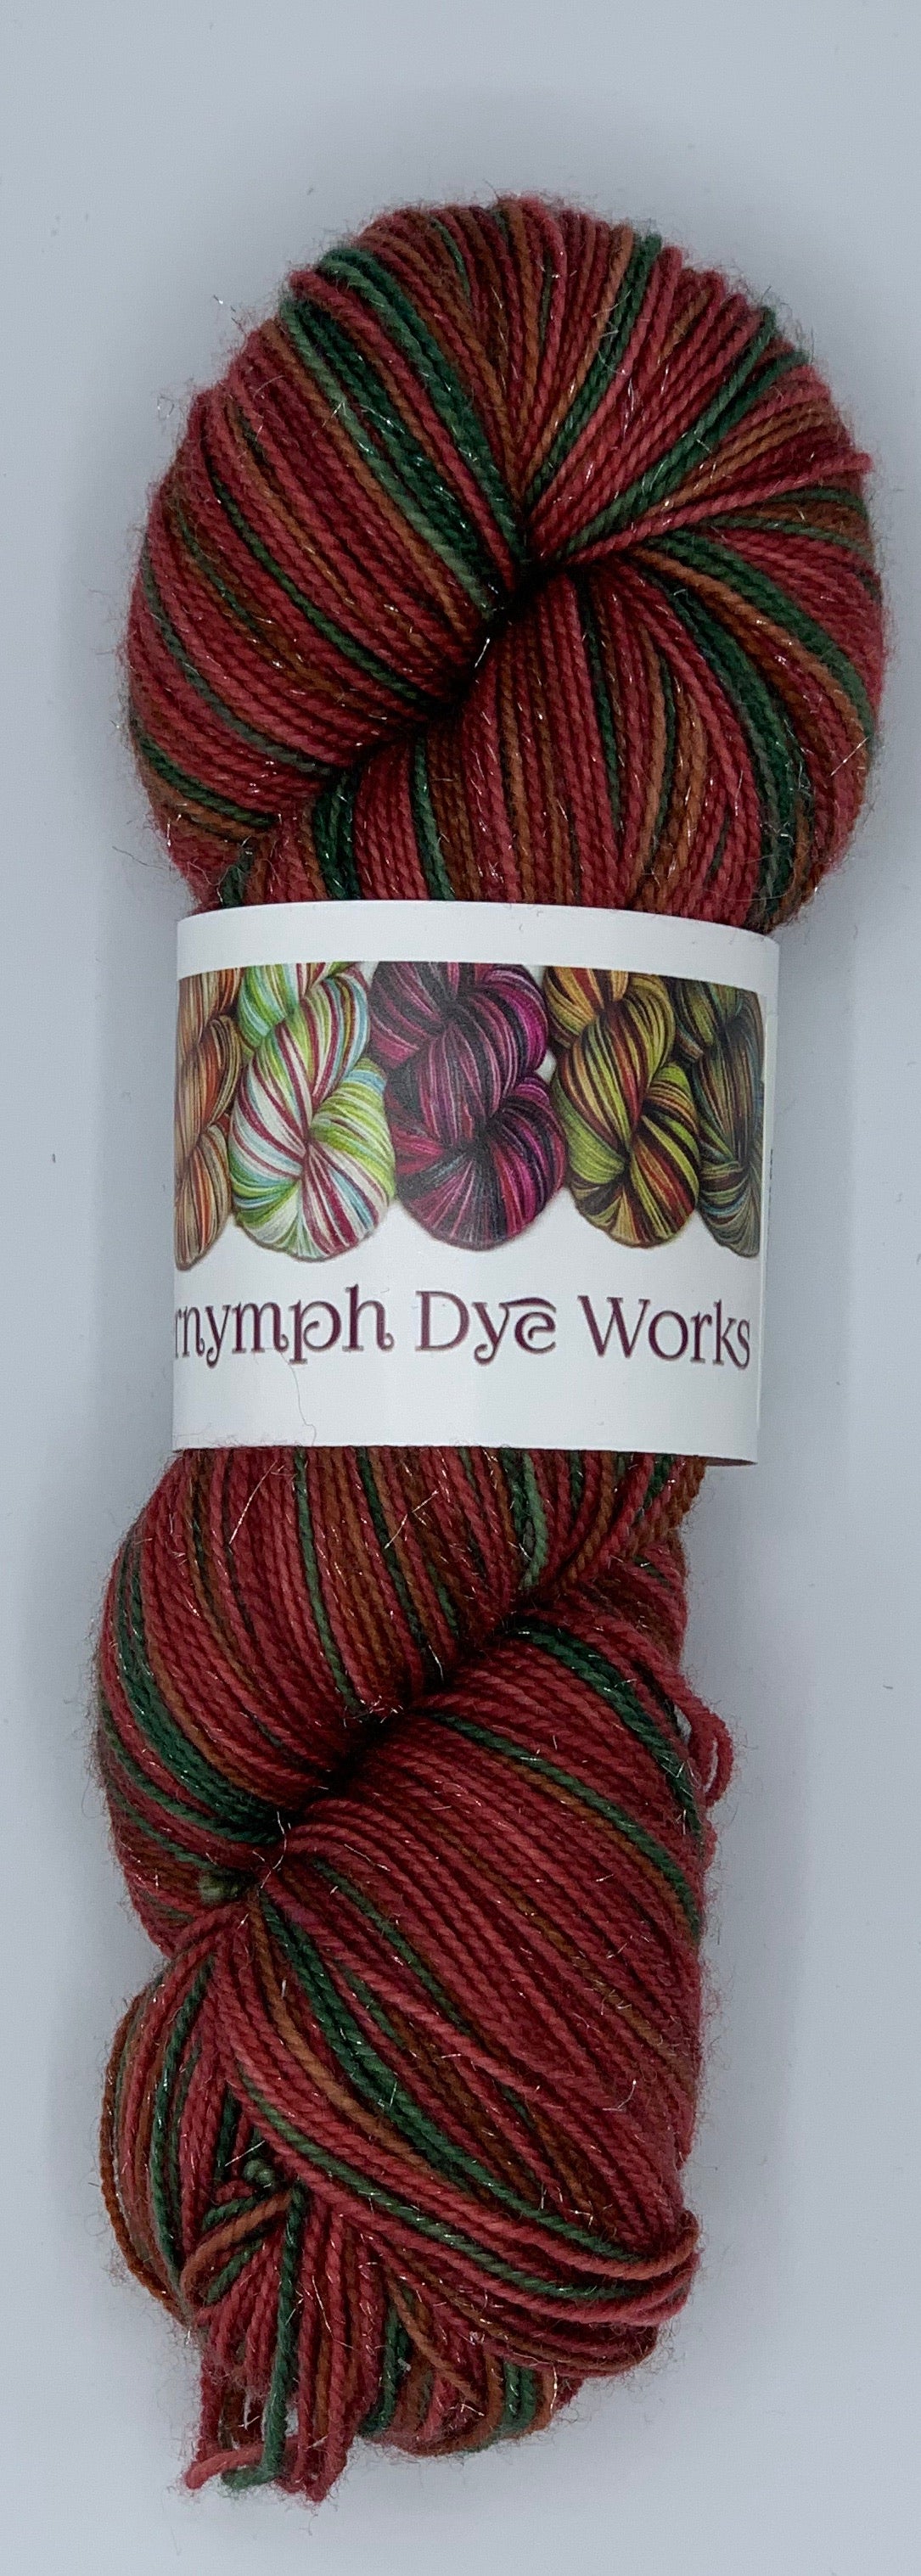 Fibernymph Dye Works Bedazzled